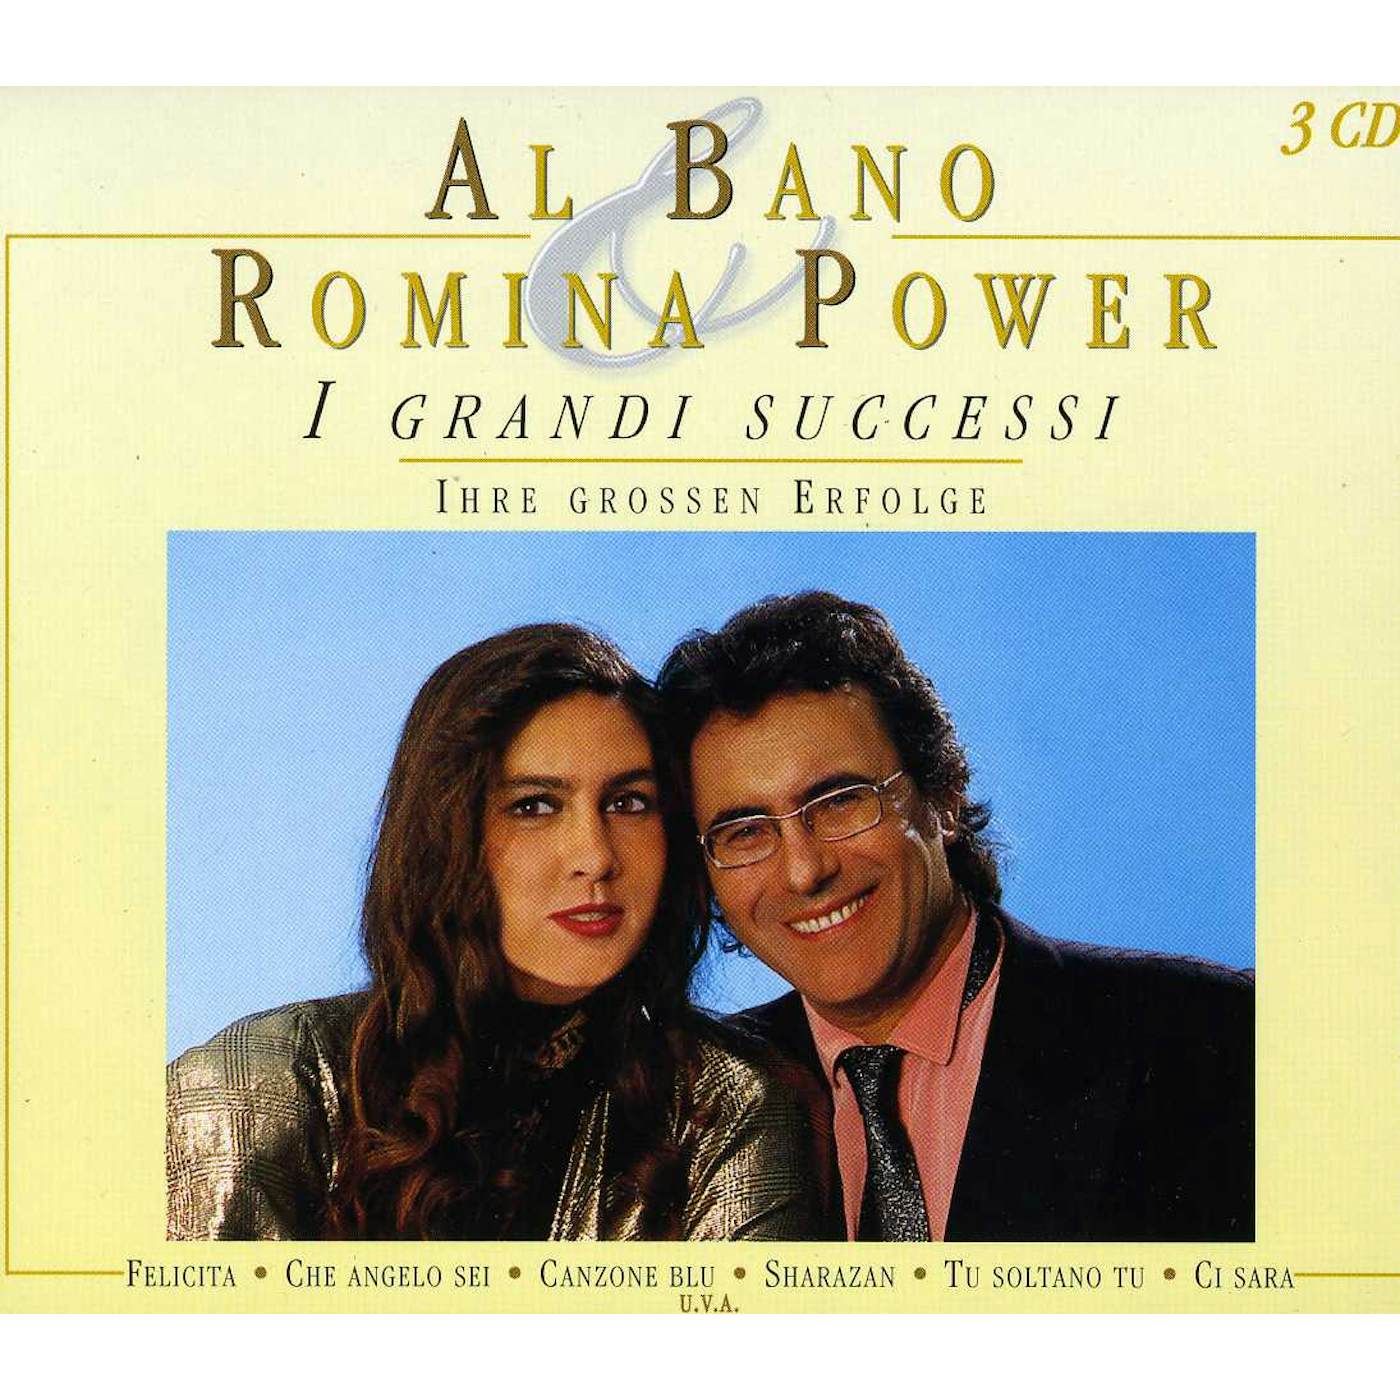 Бано и пауэр либерта. Al bano & Romina Power CD. Аль Бано и Ромина Пауэр 2018. Обложка CD al bano & Romina Power - Felicita. Альбано и Ромина Пауэр диски.